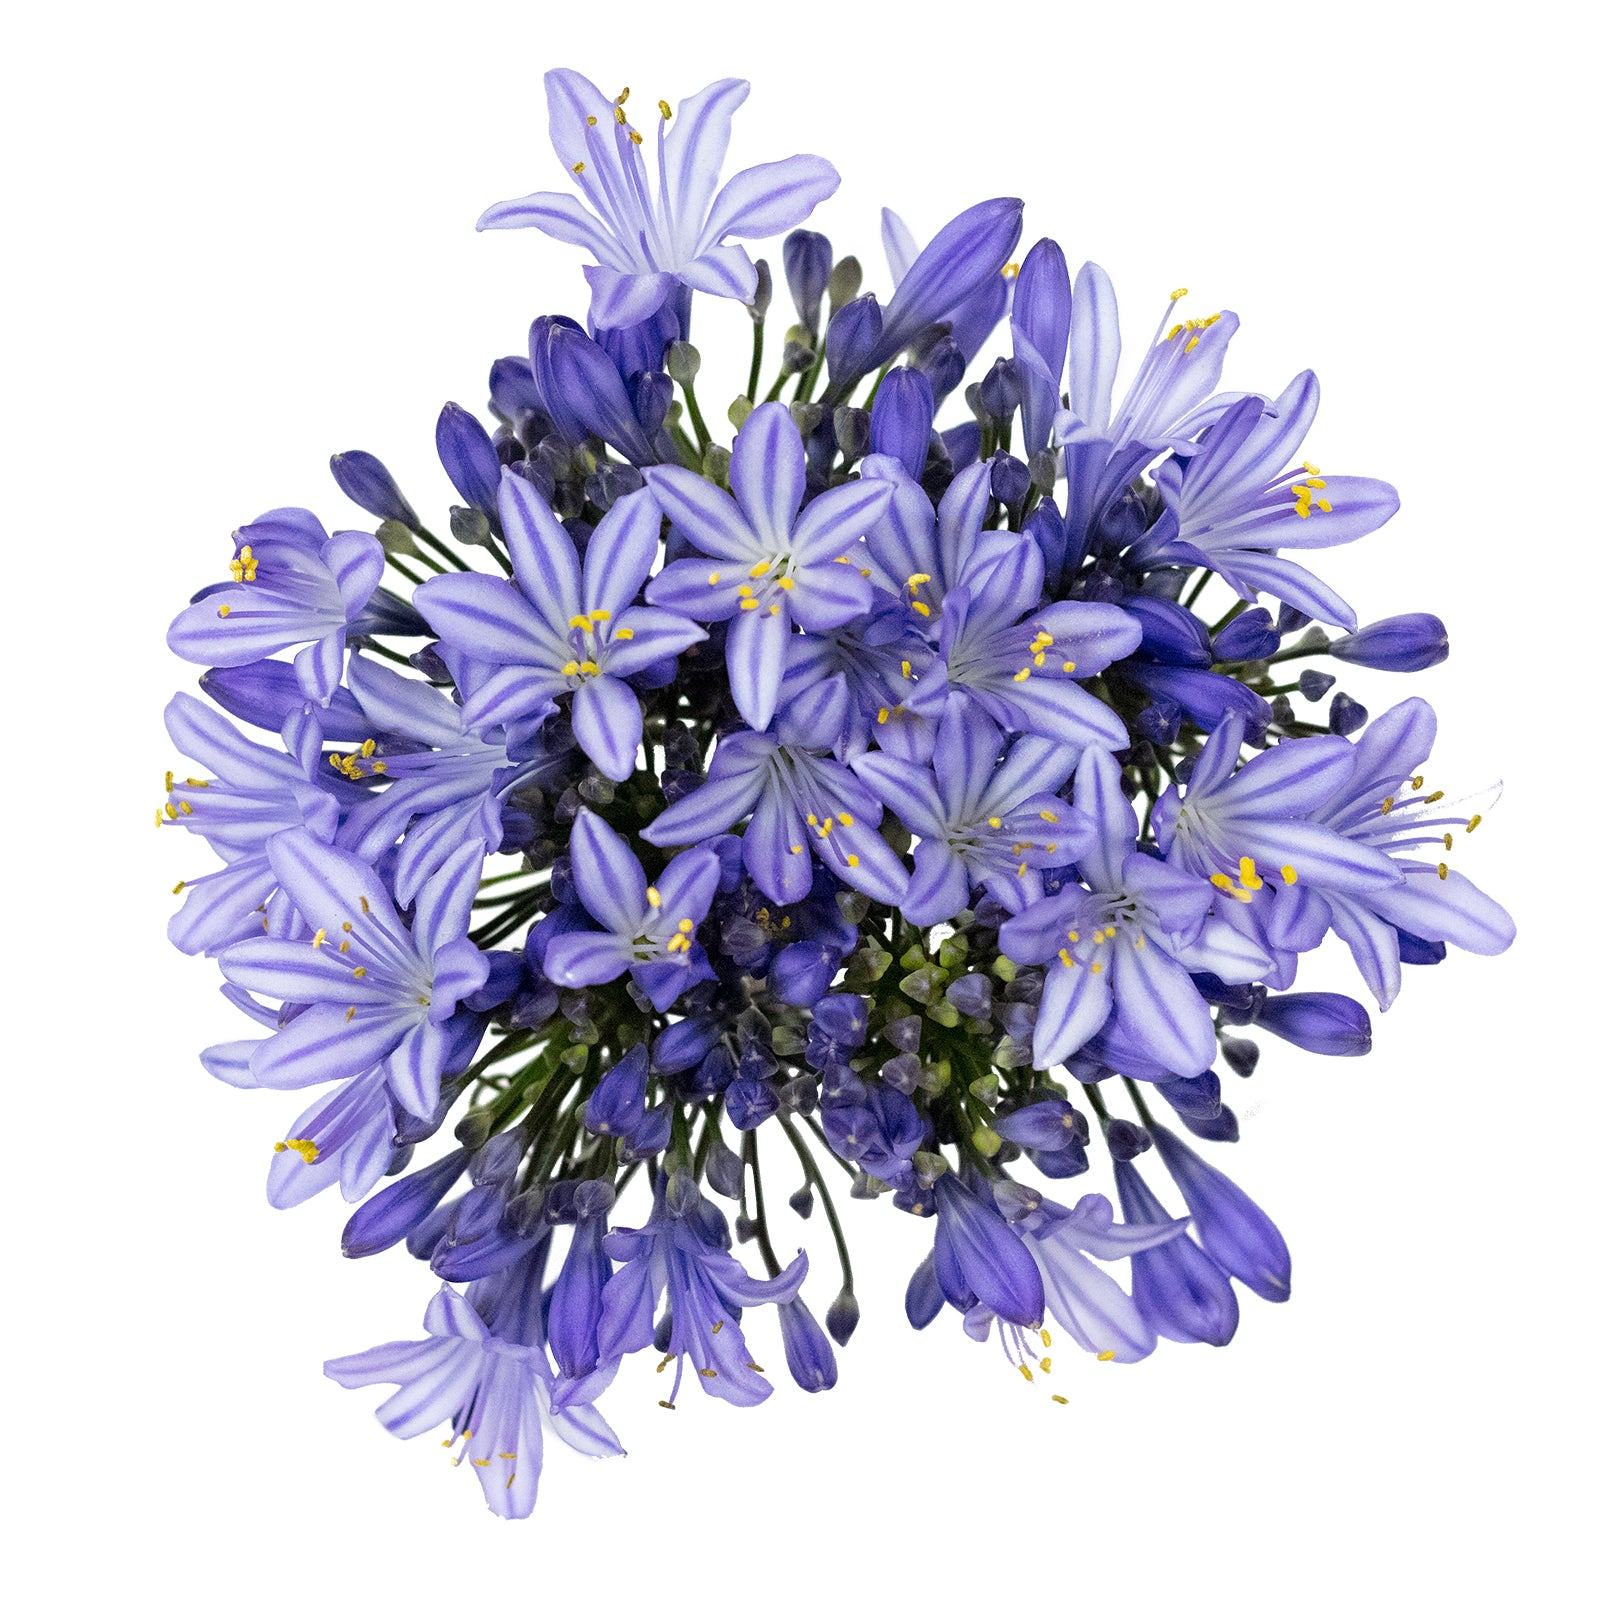 Agapanthus Blue Flower Bunch - African Lily - باقة زهرة أغابانثوس الزرقاء